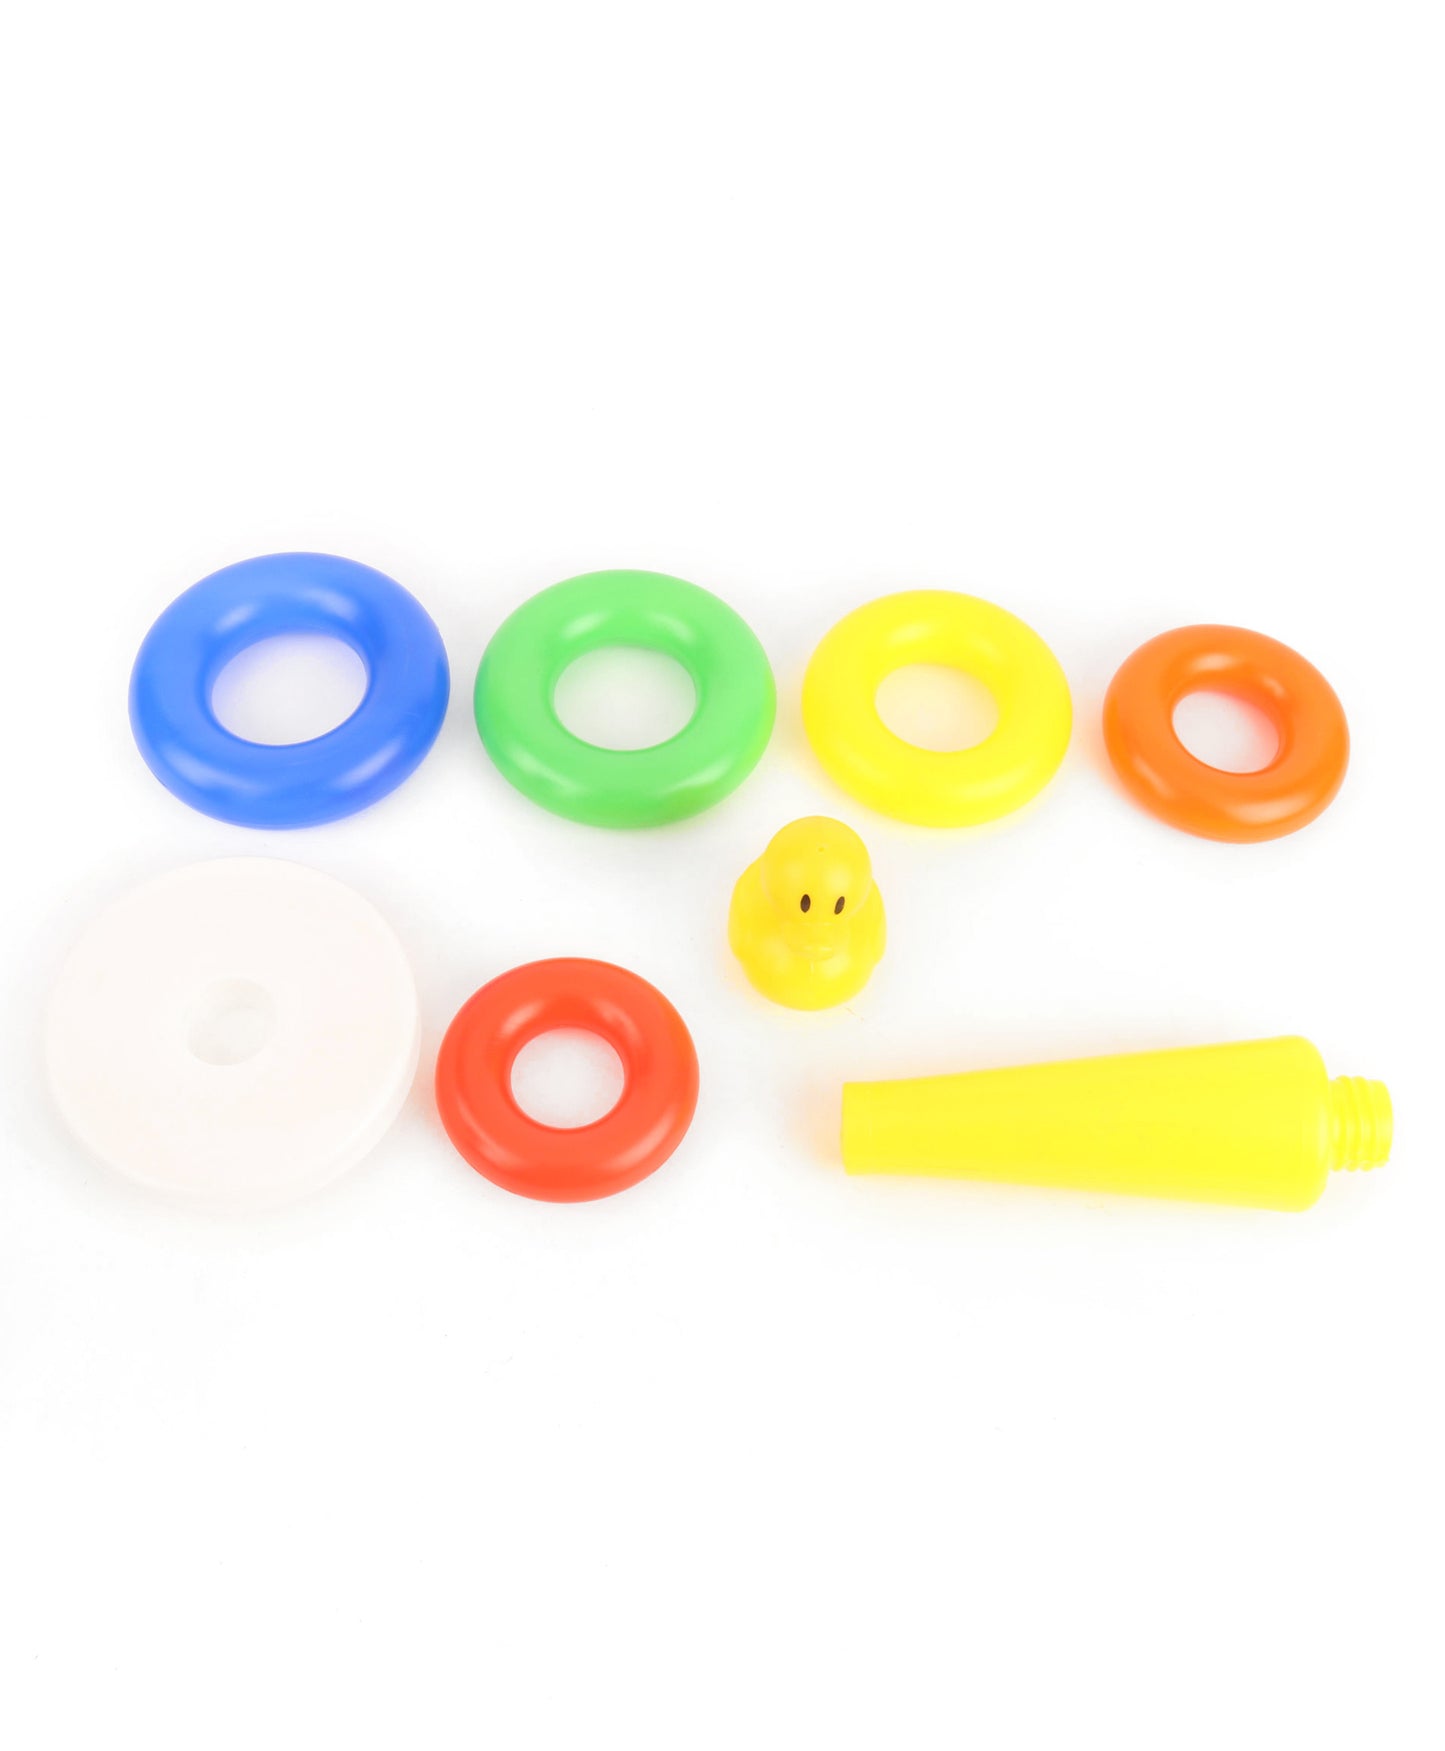 Ratnas Multicolour Small Duck Ring - Set of 8